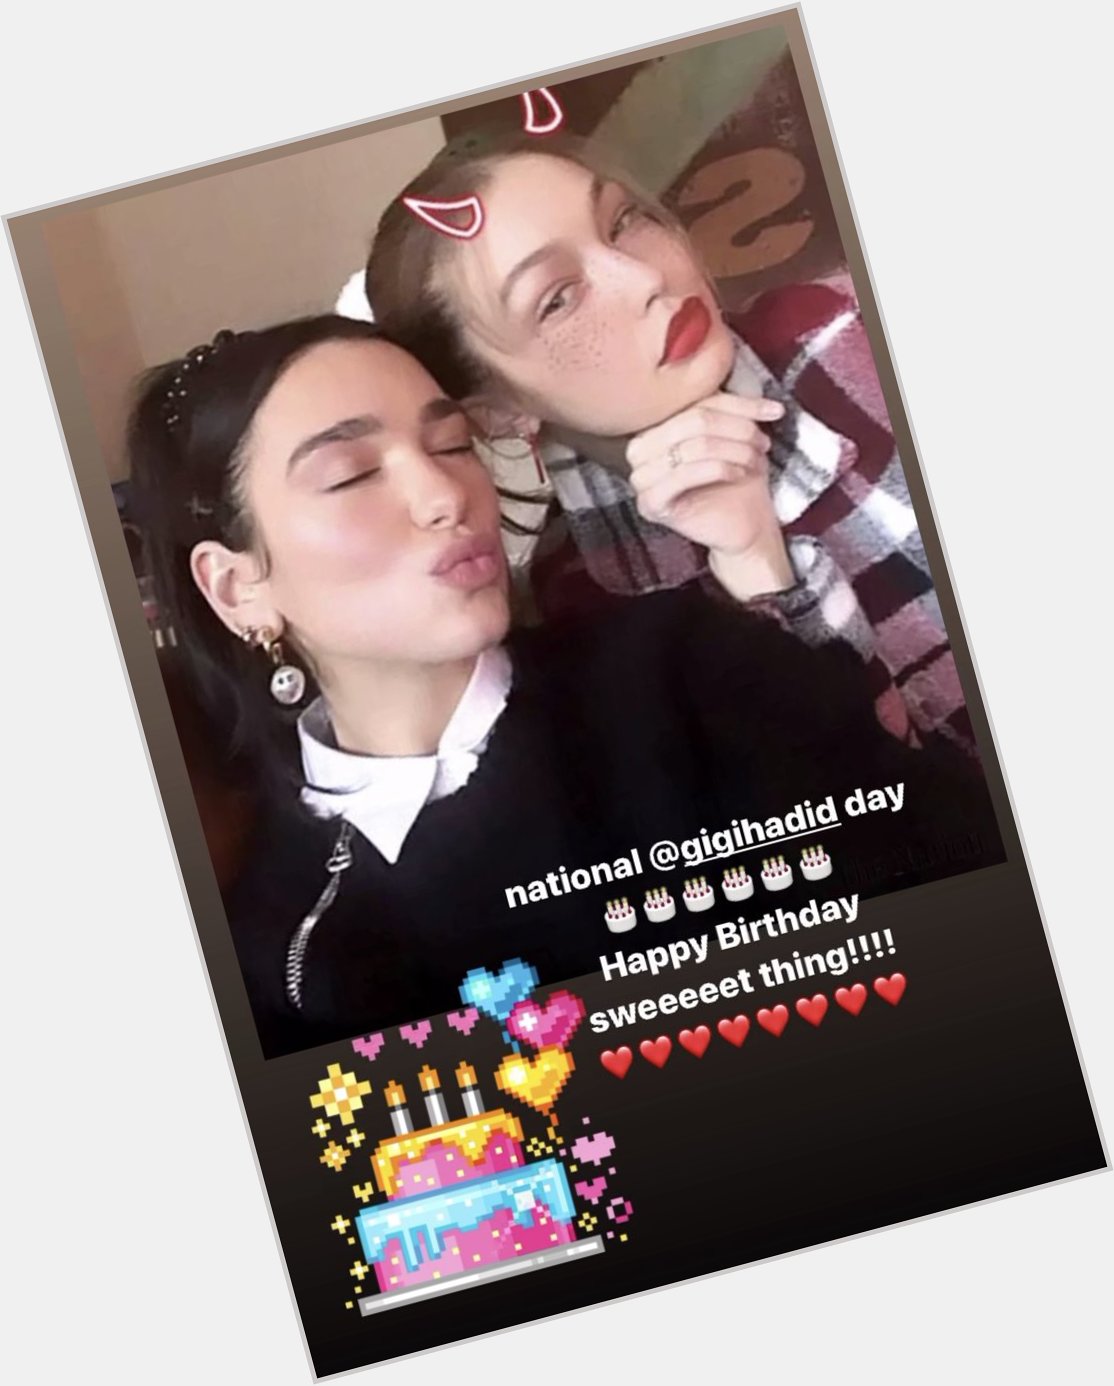 Dua Lipa wishing Gigi Hadid a Happy Birthday via Instagram Stories! 